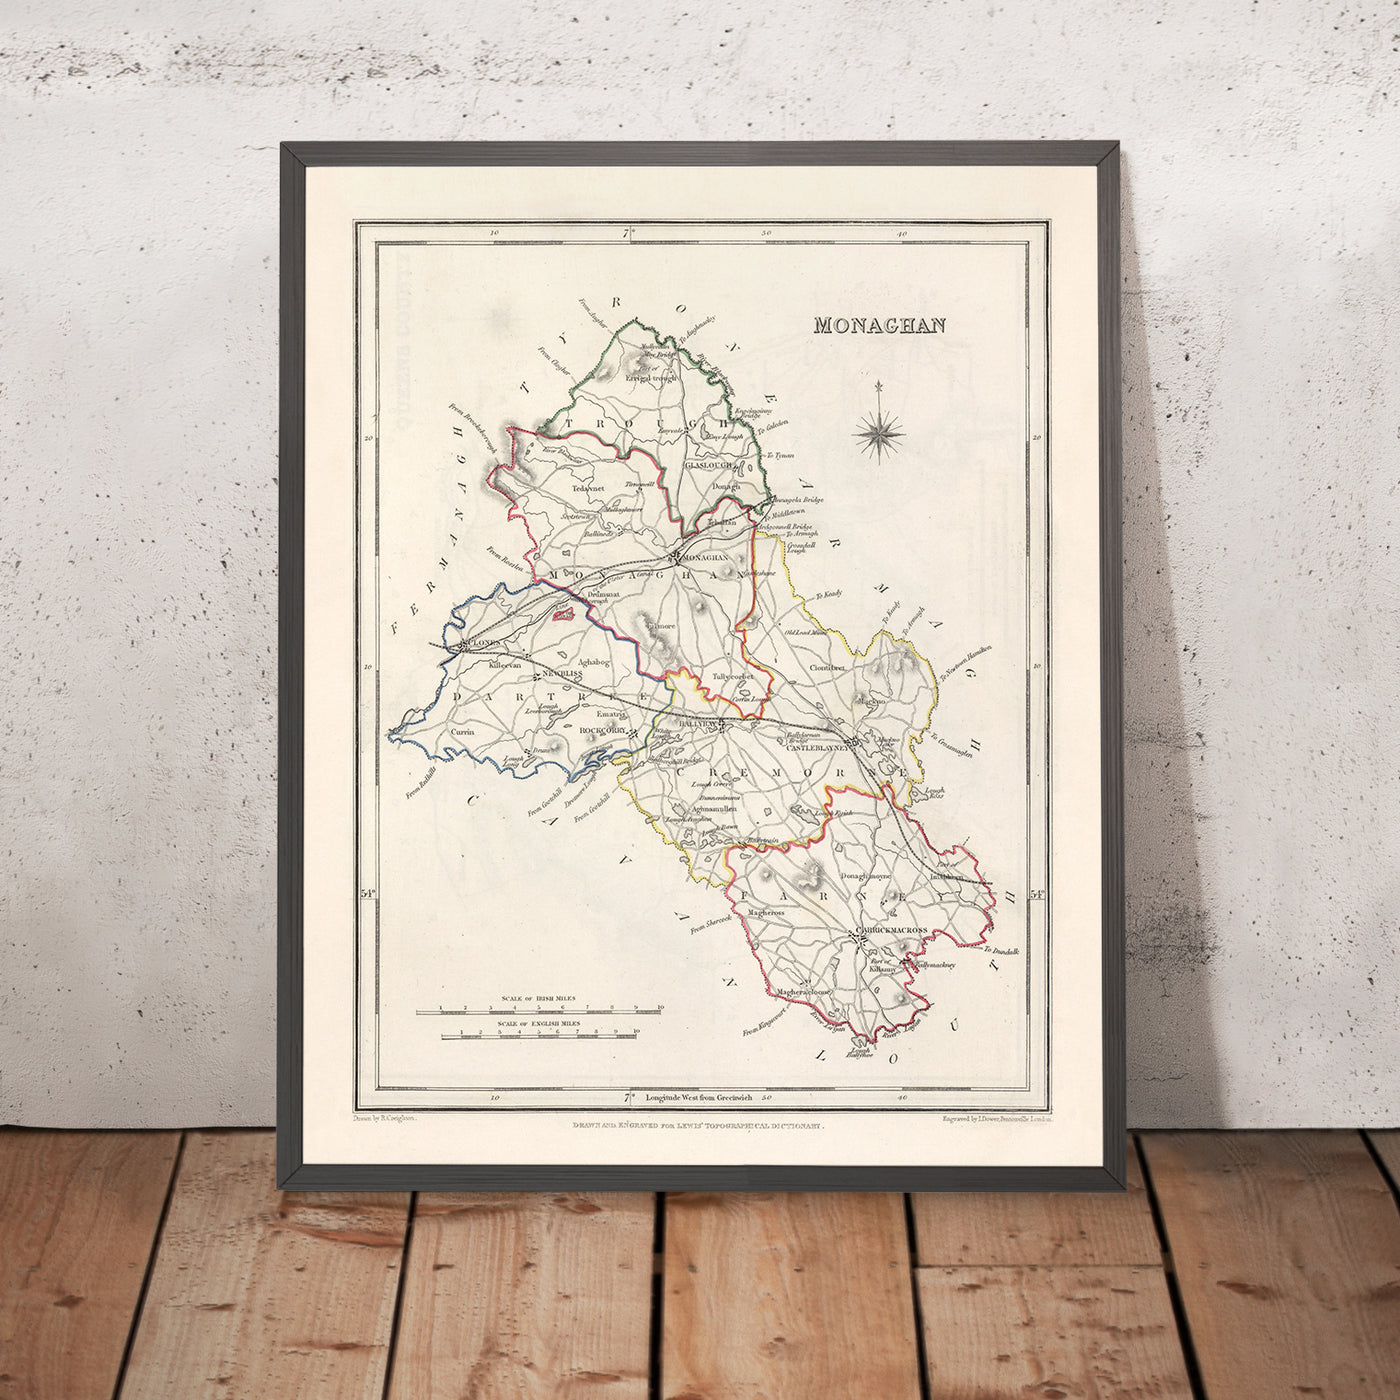 Alte Karte der Grafschaft Monaghan von Samuel Lewis, 1844: Castleblayney, Clones, Ballybay, Carrickmacross, Glaslough